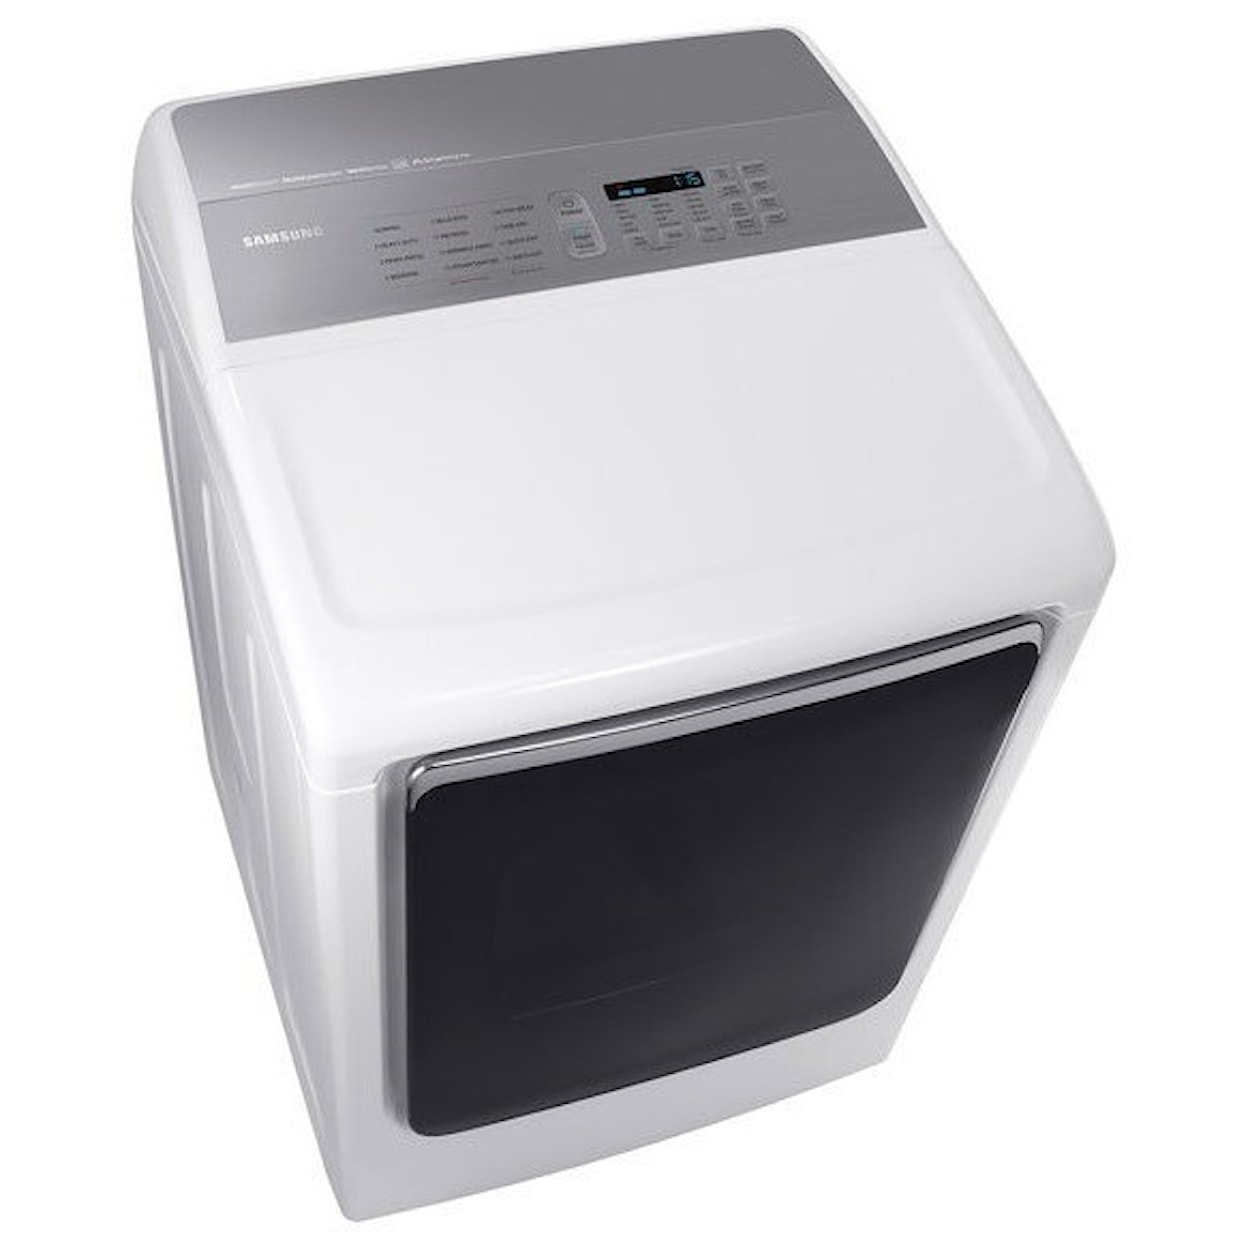 Samsung Appliances Dryers- Samsung 7.4 cu. ft. Electric Dryer